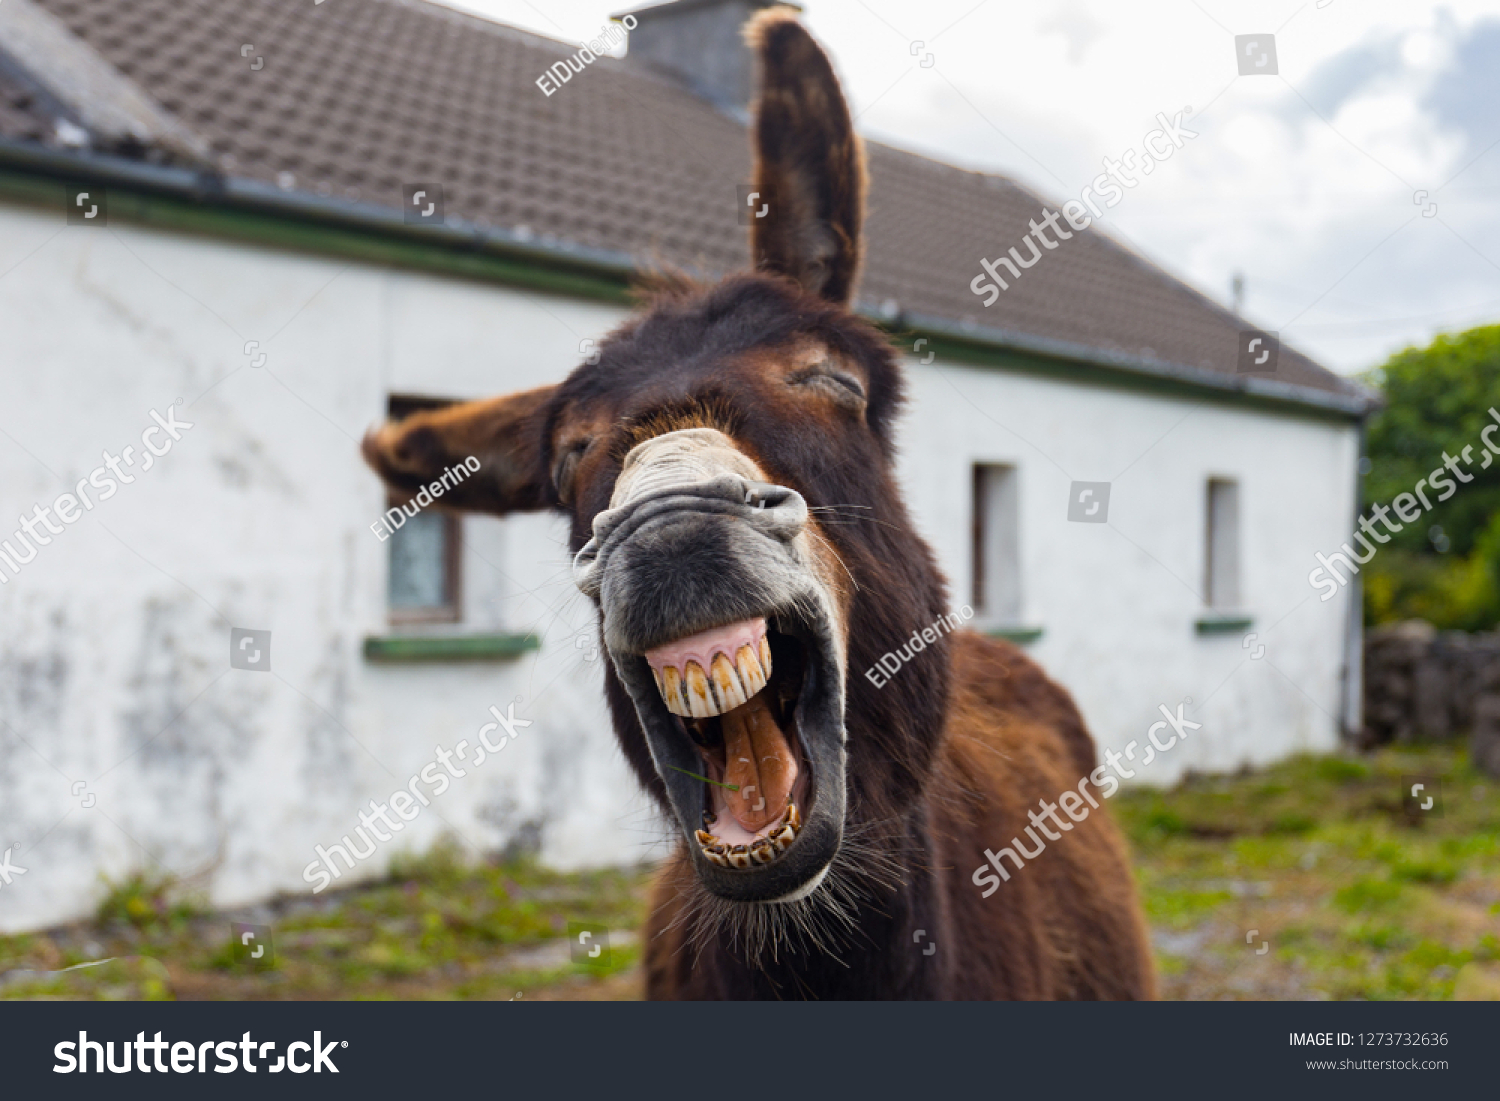 stock-photo-funny-donkey-laughing-at-the-camera-1273732636.jpg